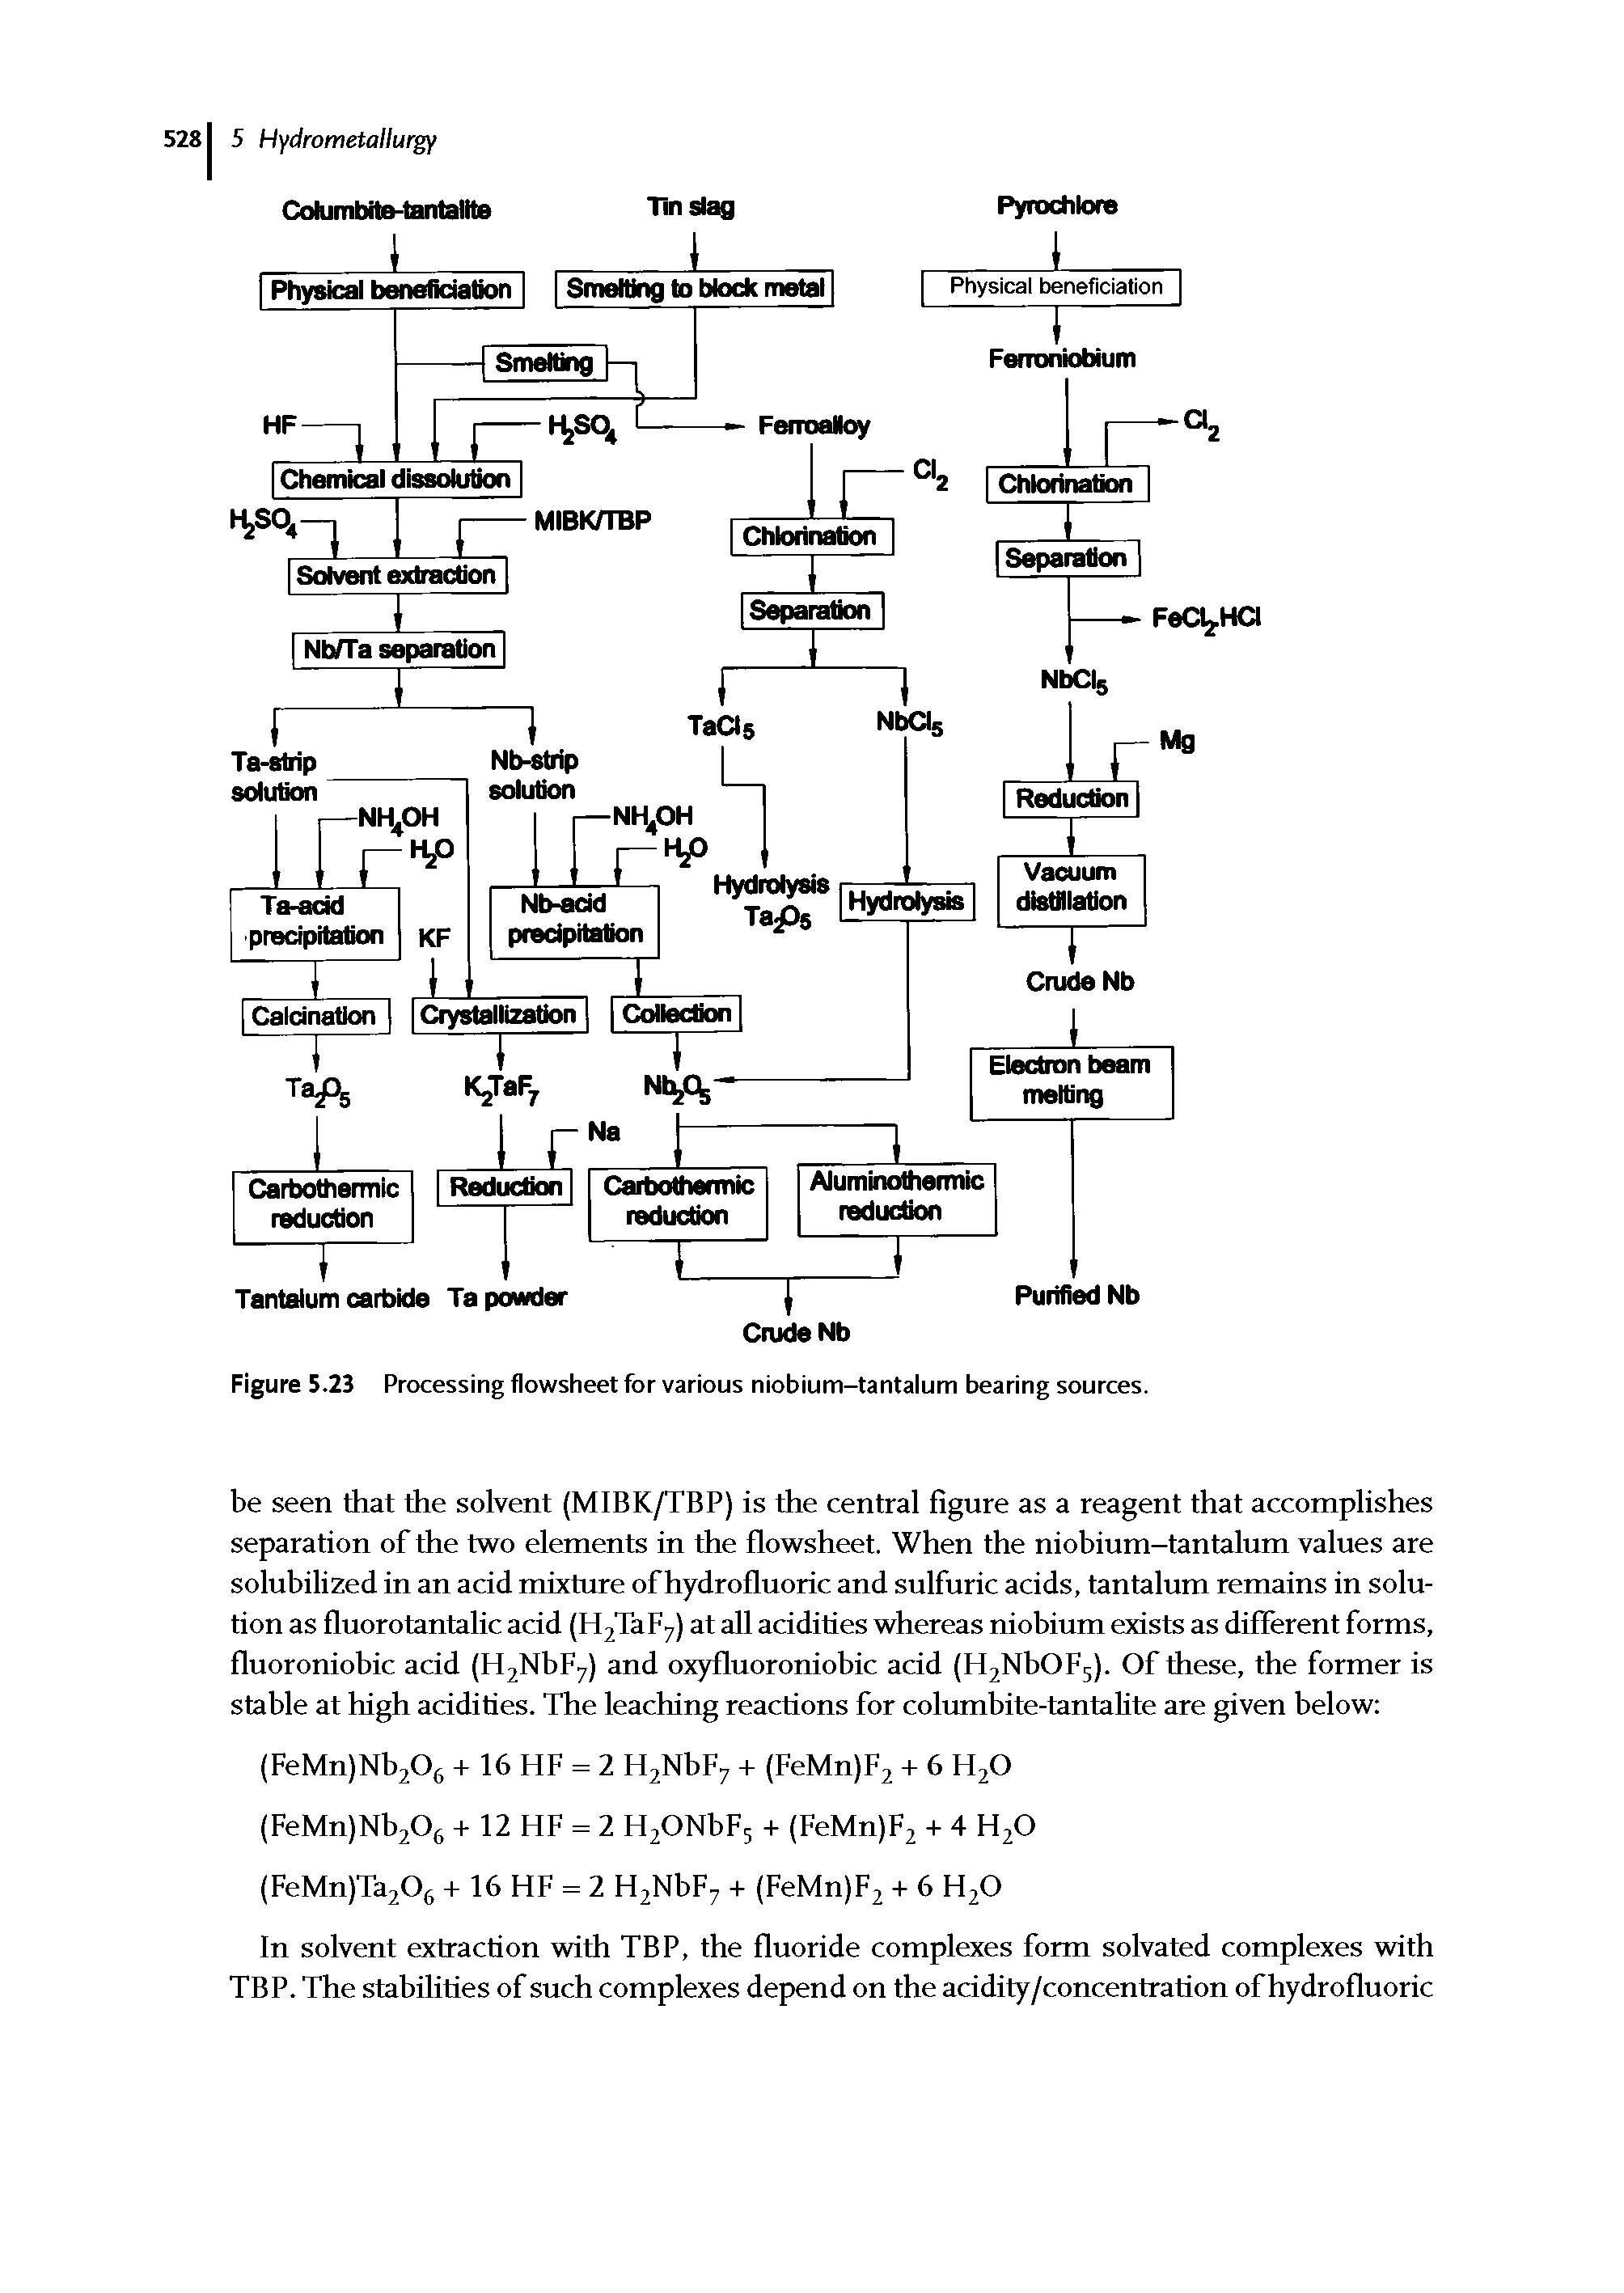 Figure 5.23 Processing flowsheet for various niobium-tantalum bearing sources.